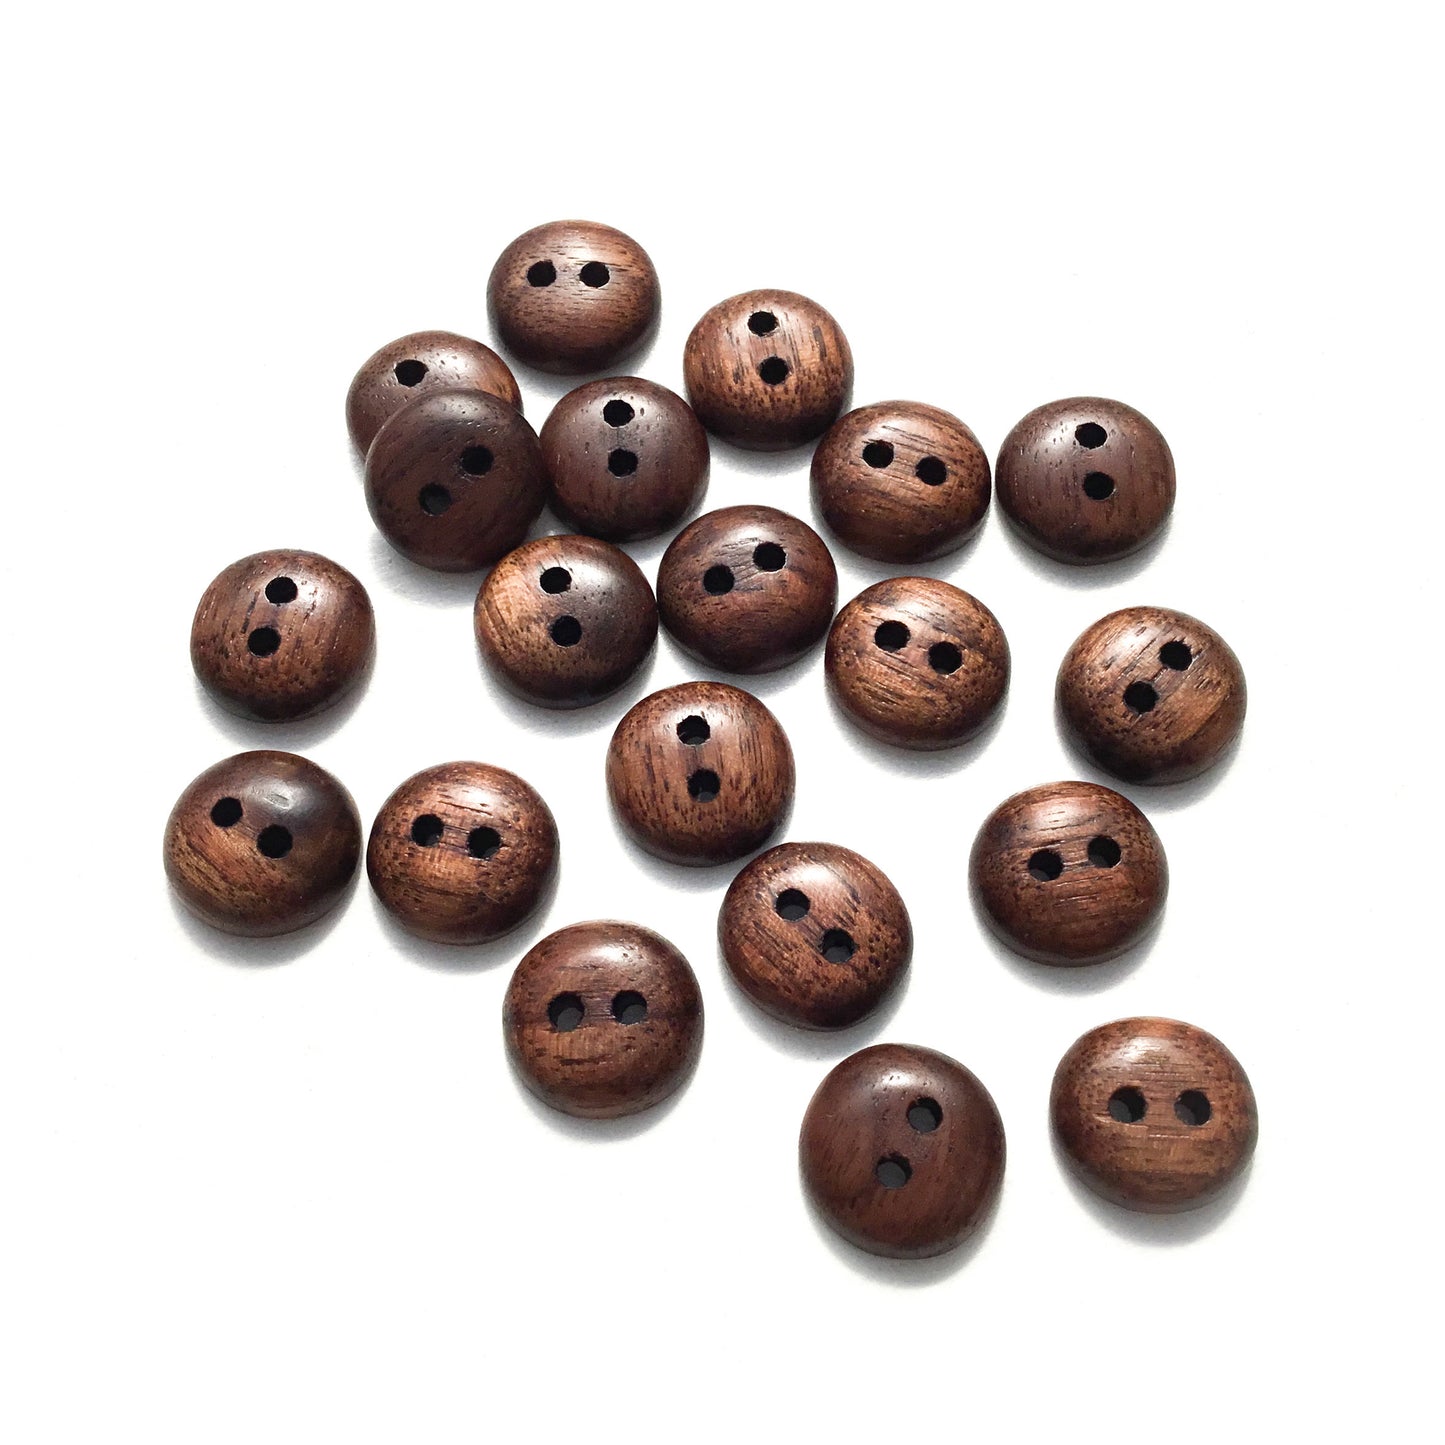 Black Walnut Wood Buttons - 1/2”